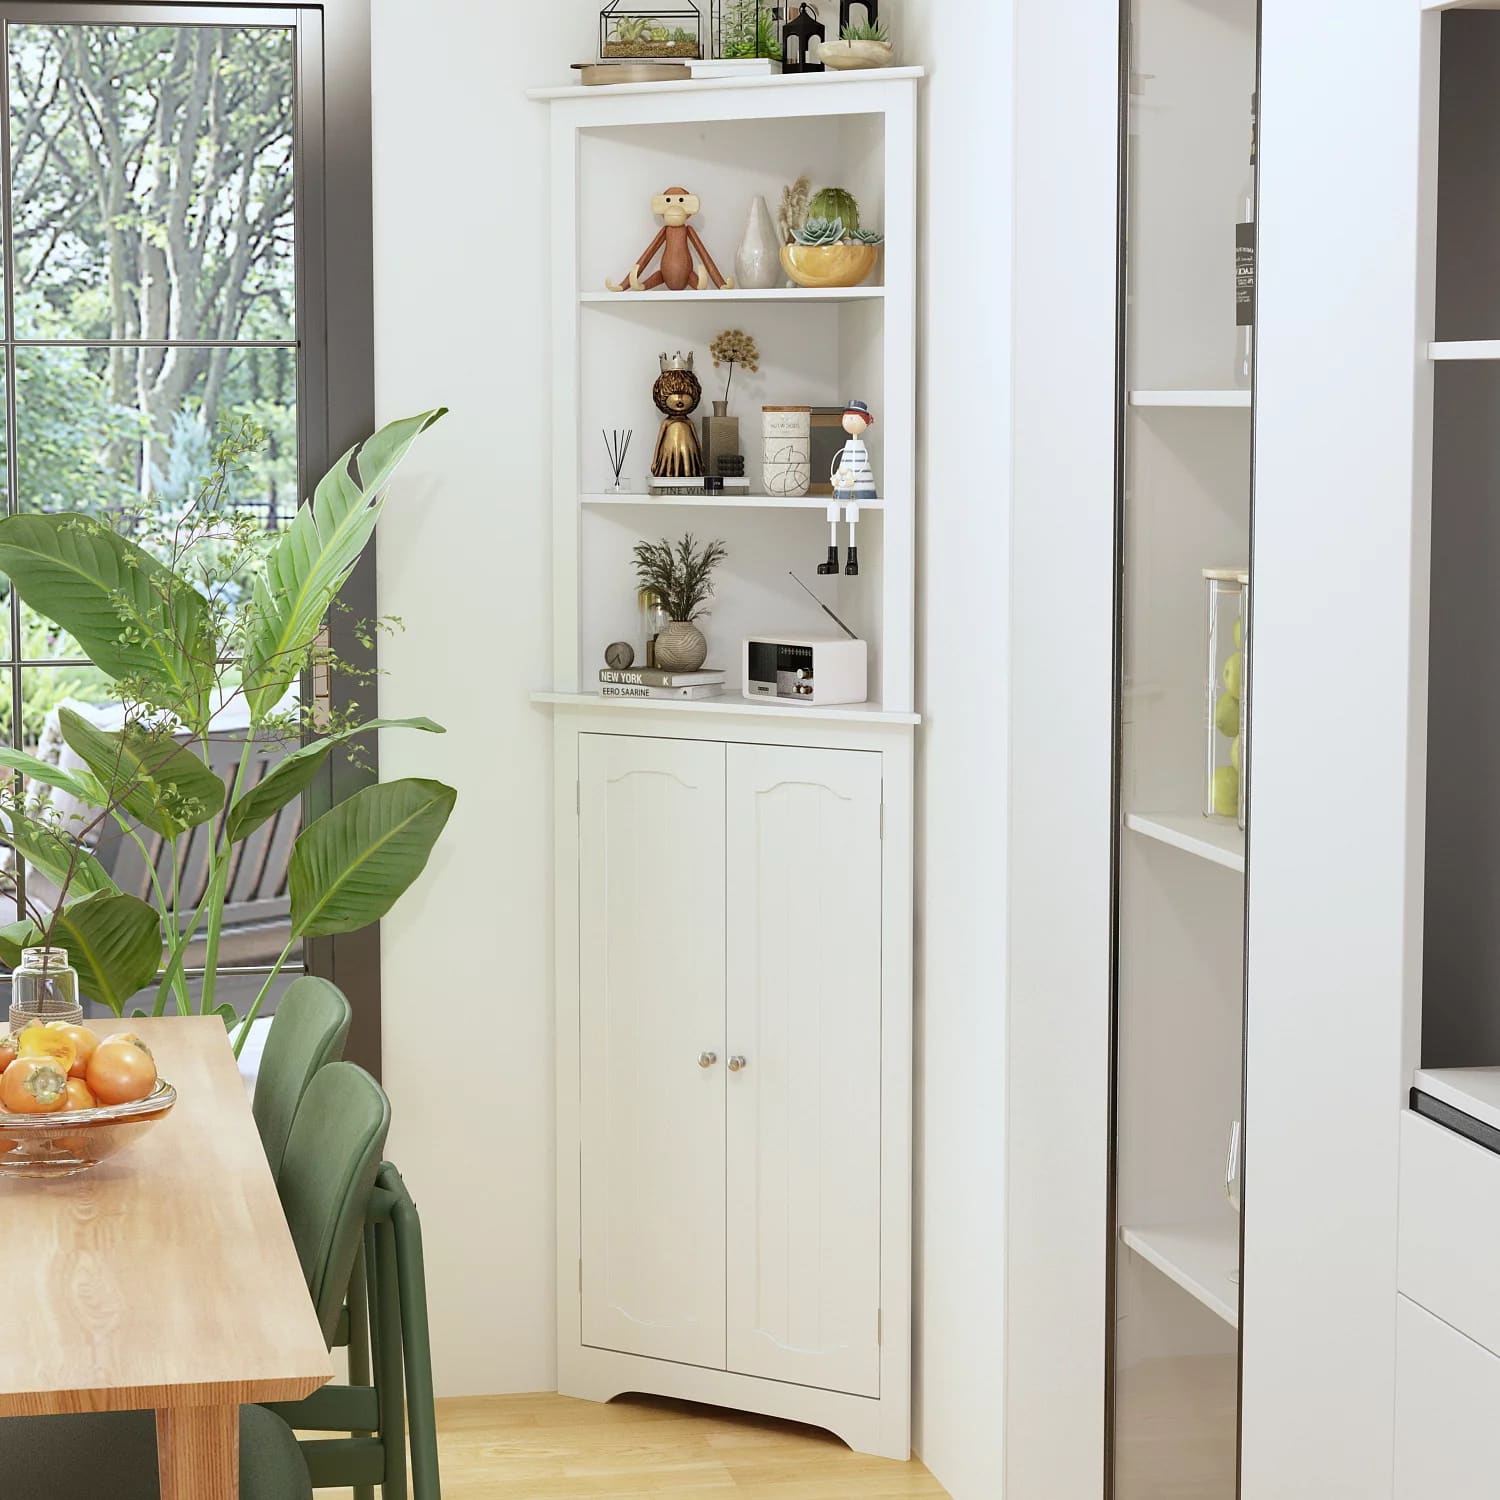 Corner Cabinets To Create More Storage